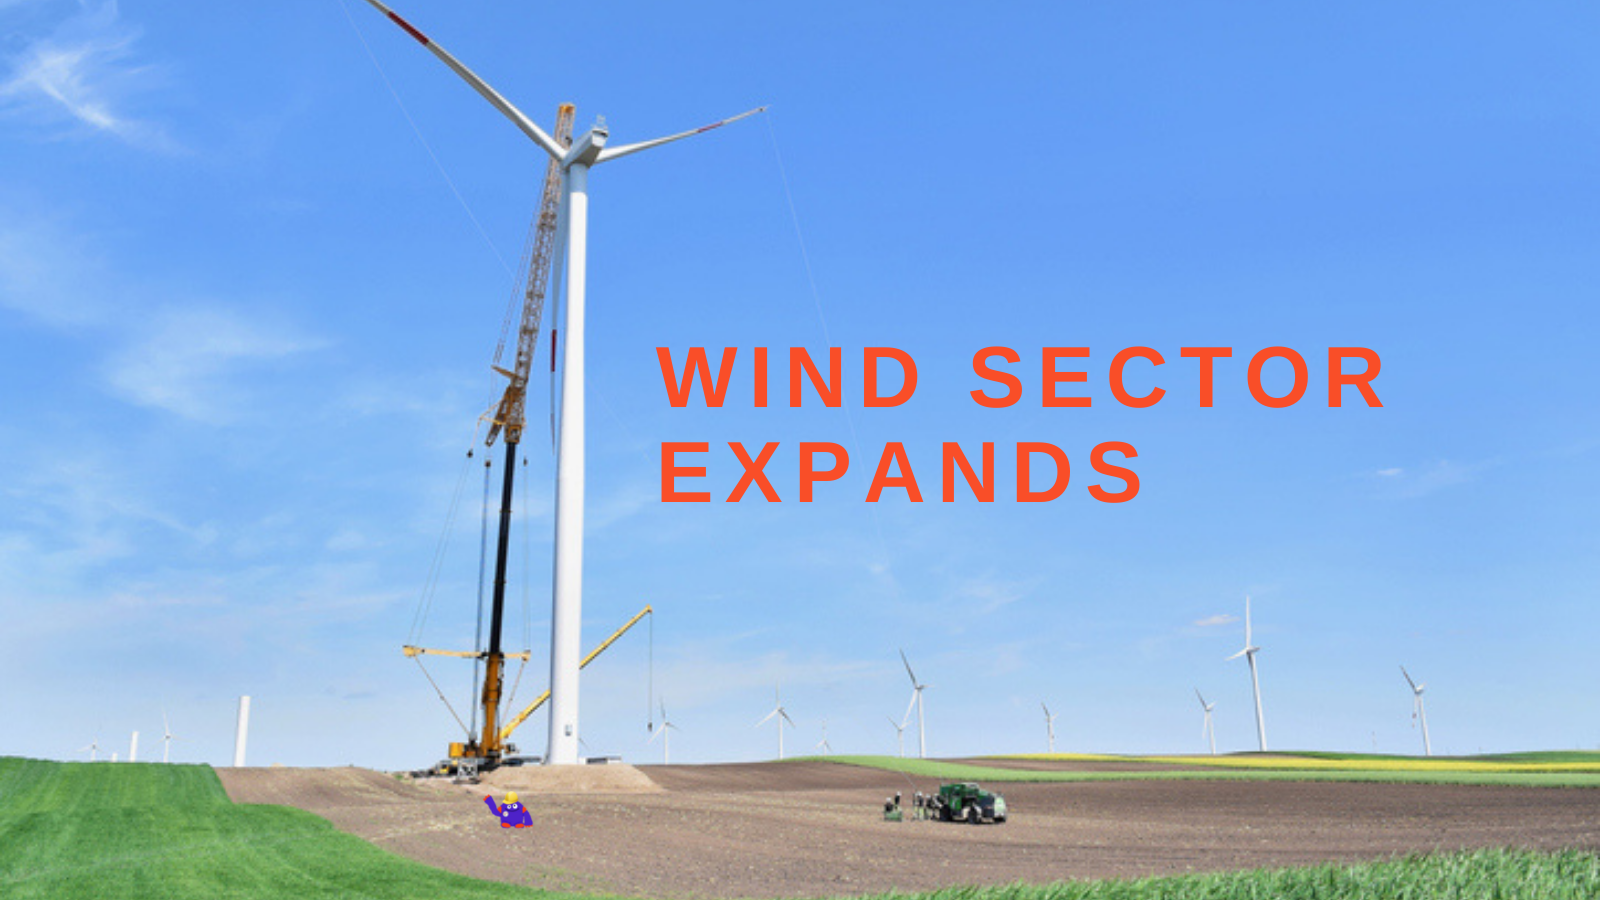 mobile crane wind turbine - wind sector expands